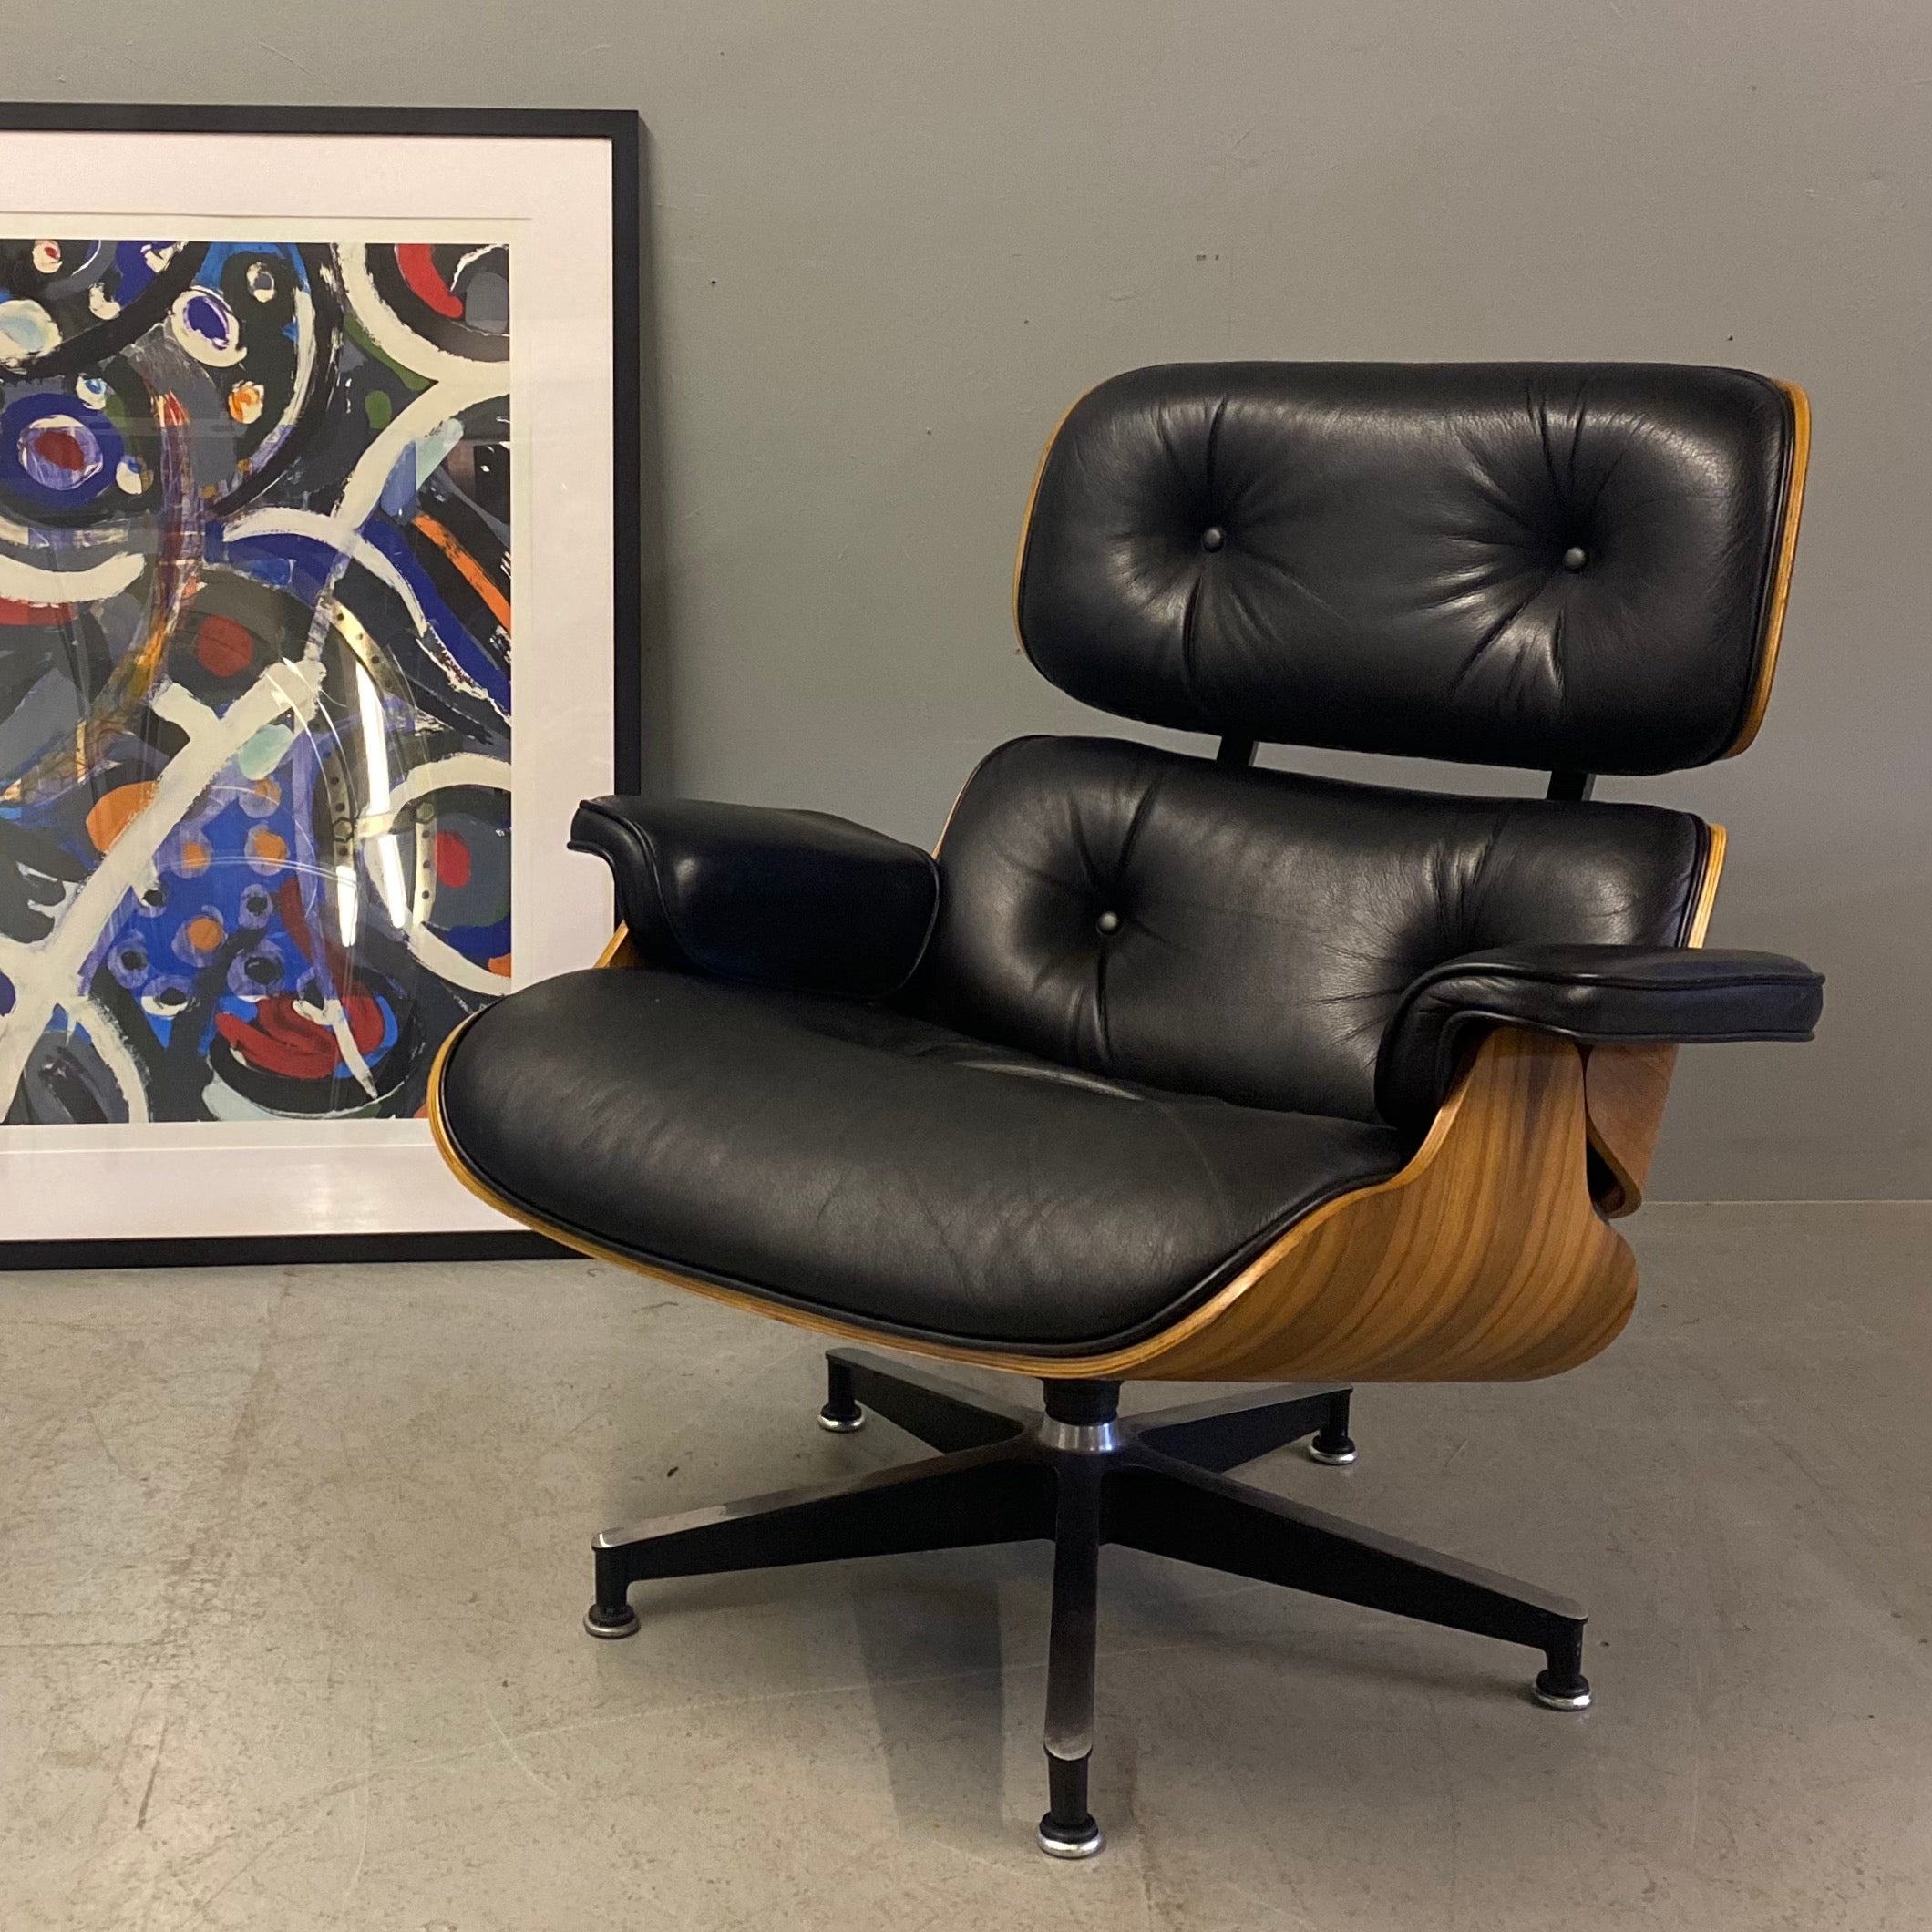 Herman Miller Eames Chair Original